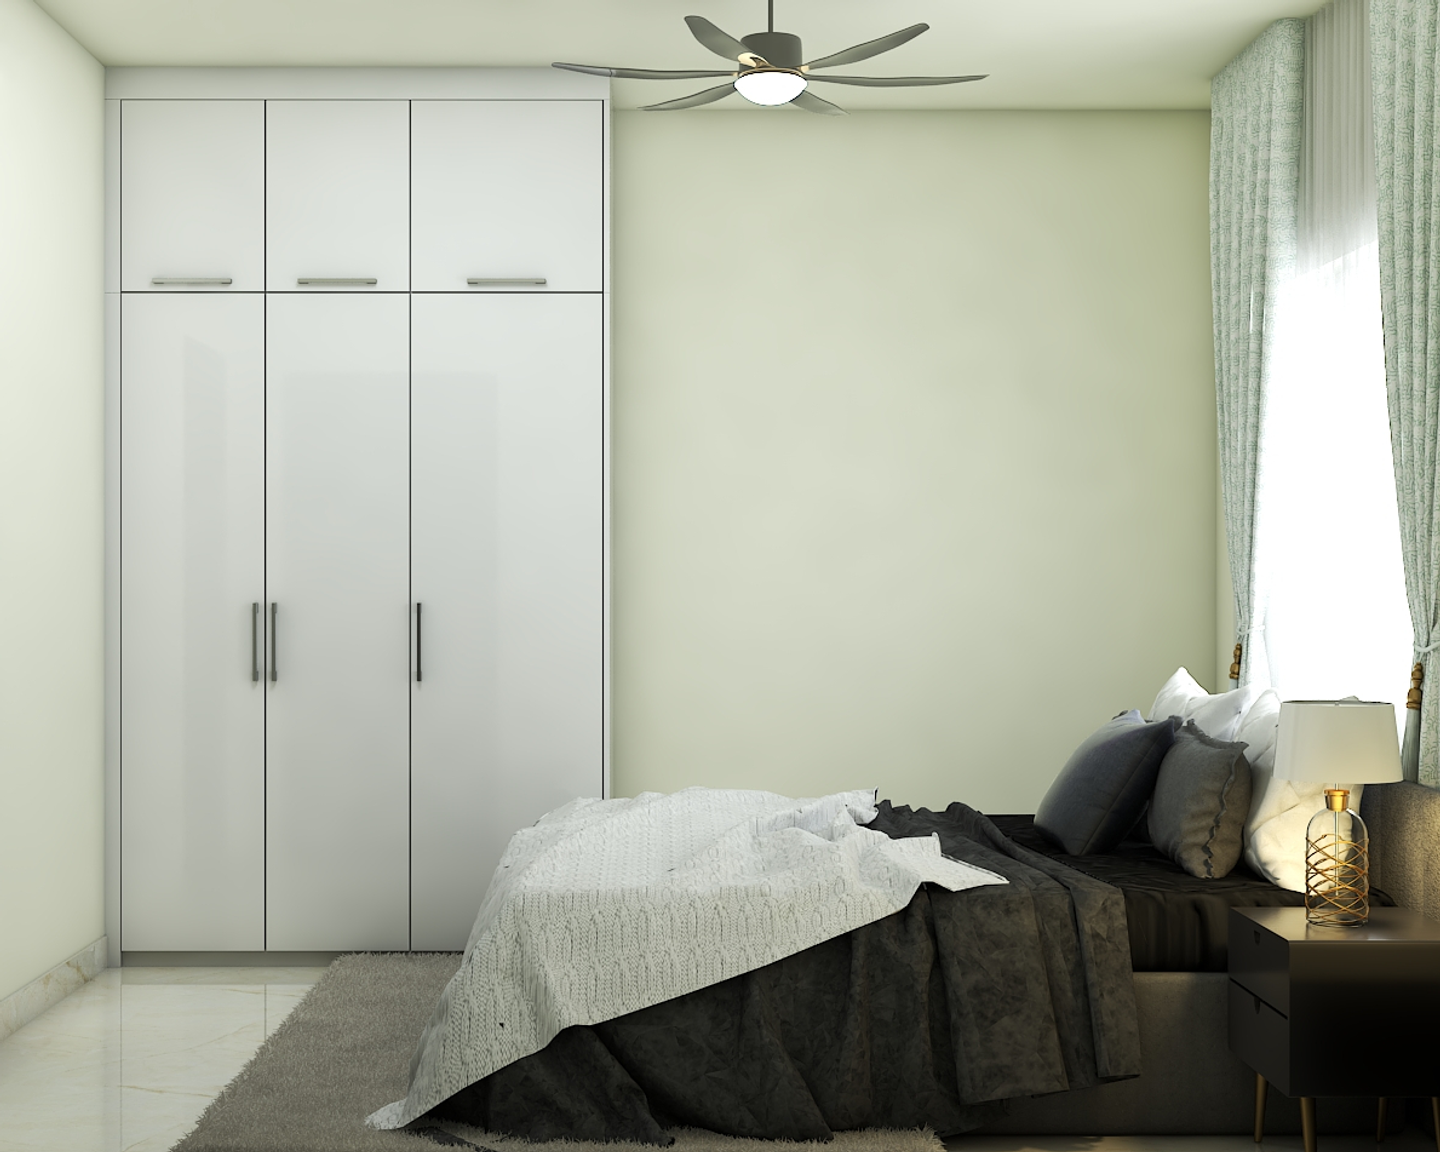 Comfortable Guest Room Design Ideas With MInimal Interiors - Livspace